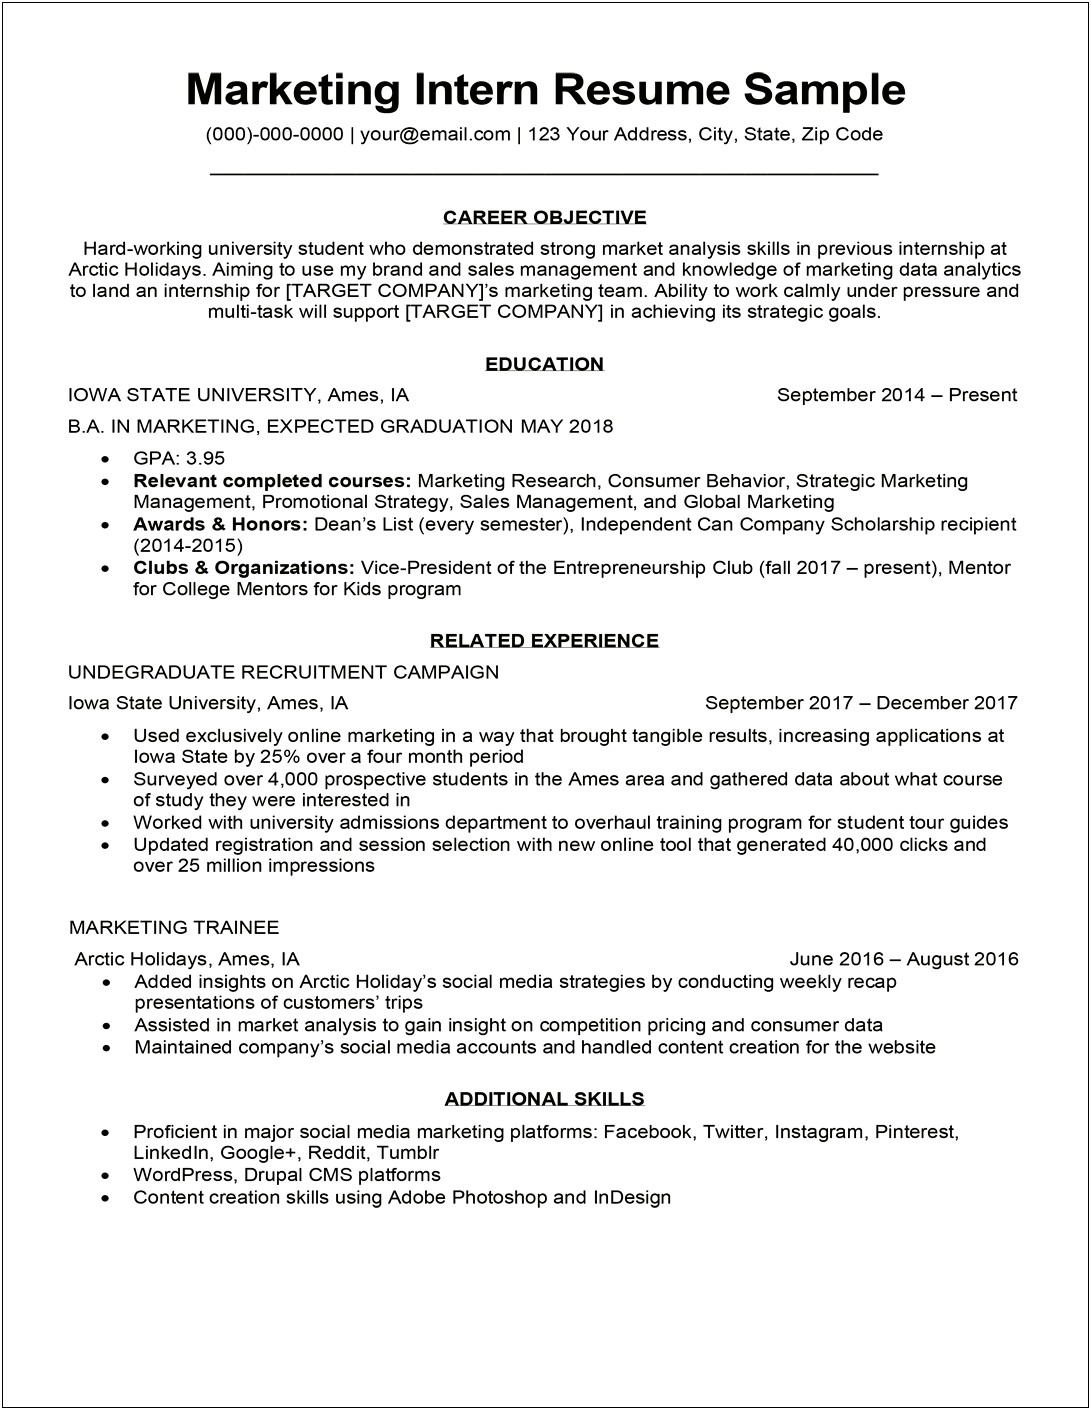 Resume Job Description Examples Reddit